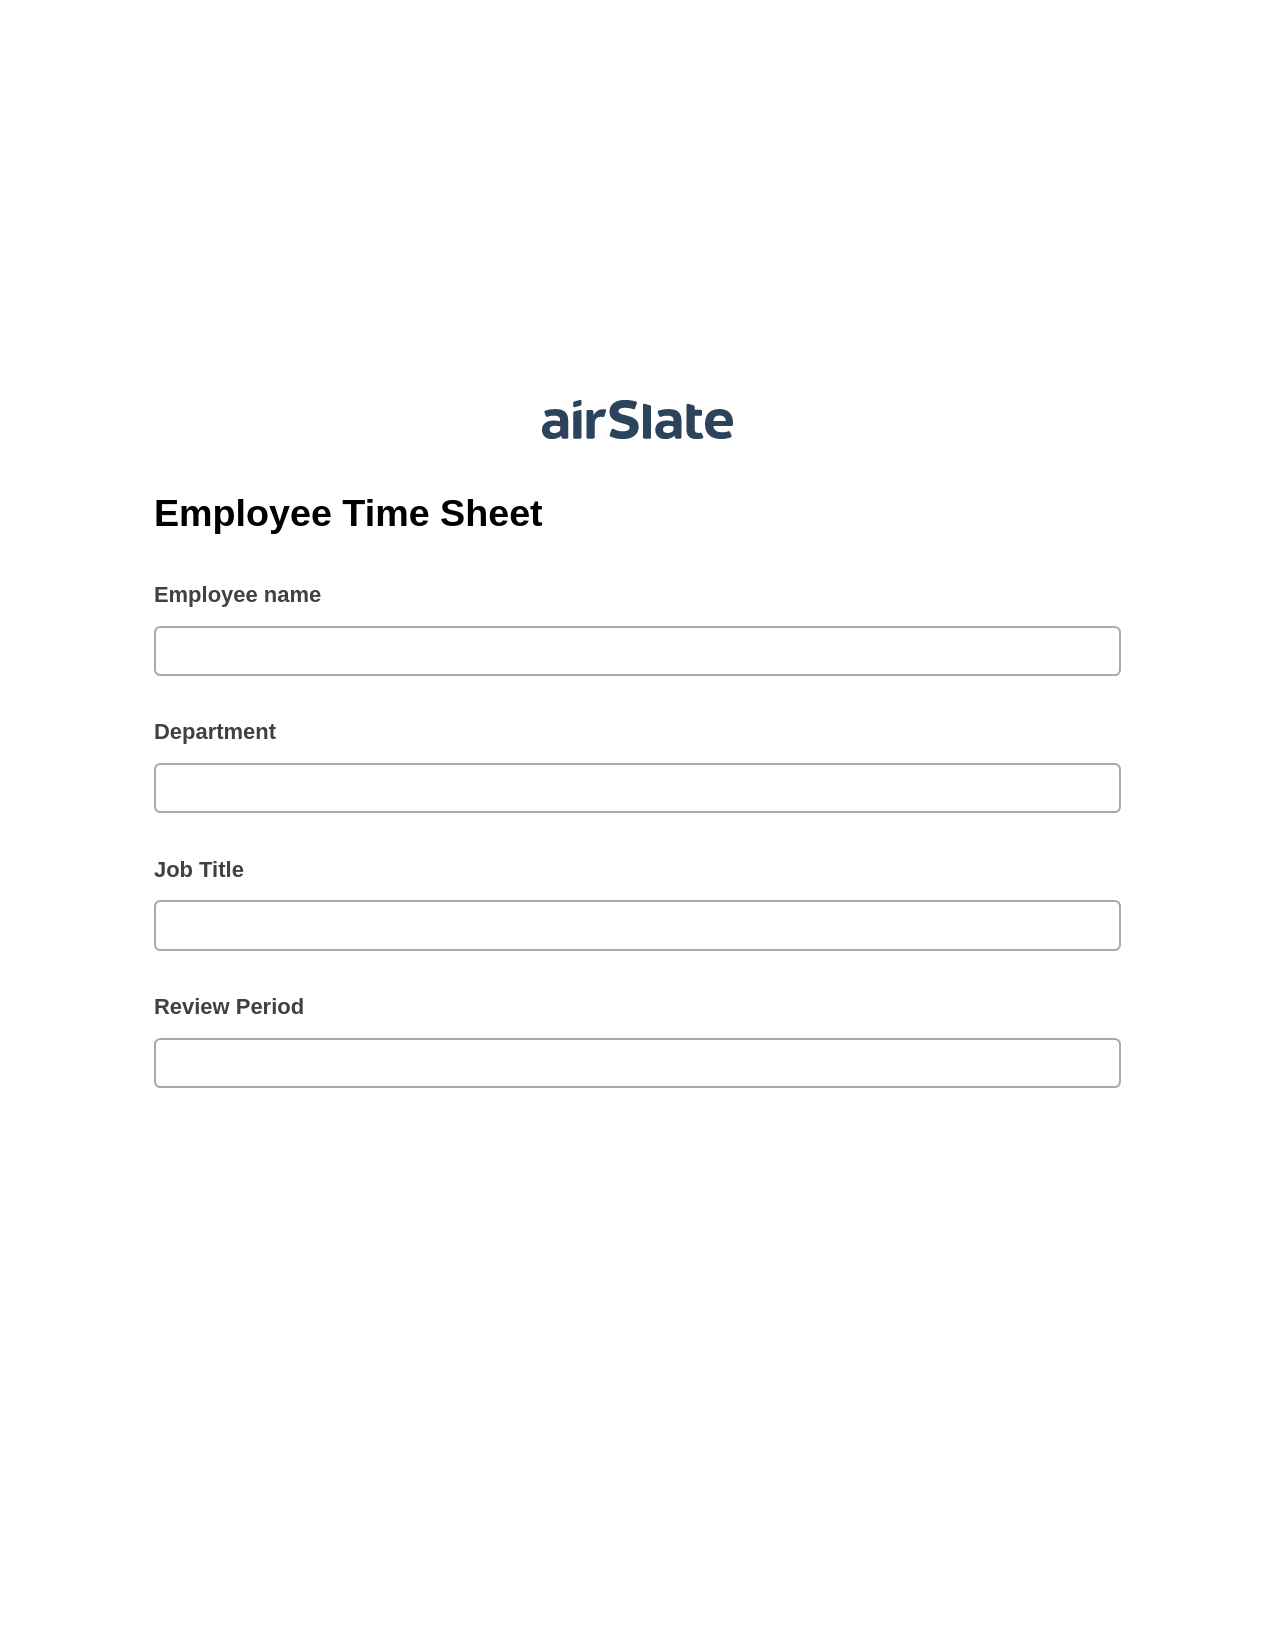 Employee Time Sheet Pre-fill from Google Sheets Bot, Roles Reminder Bot, Slack Notification Postfinish Bot